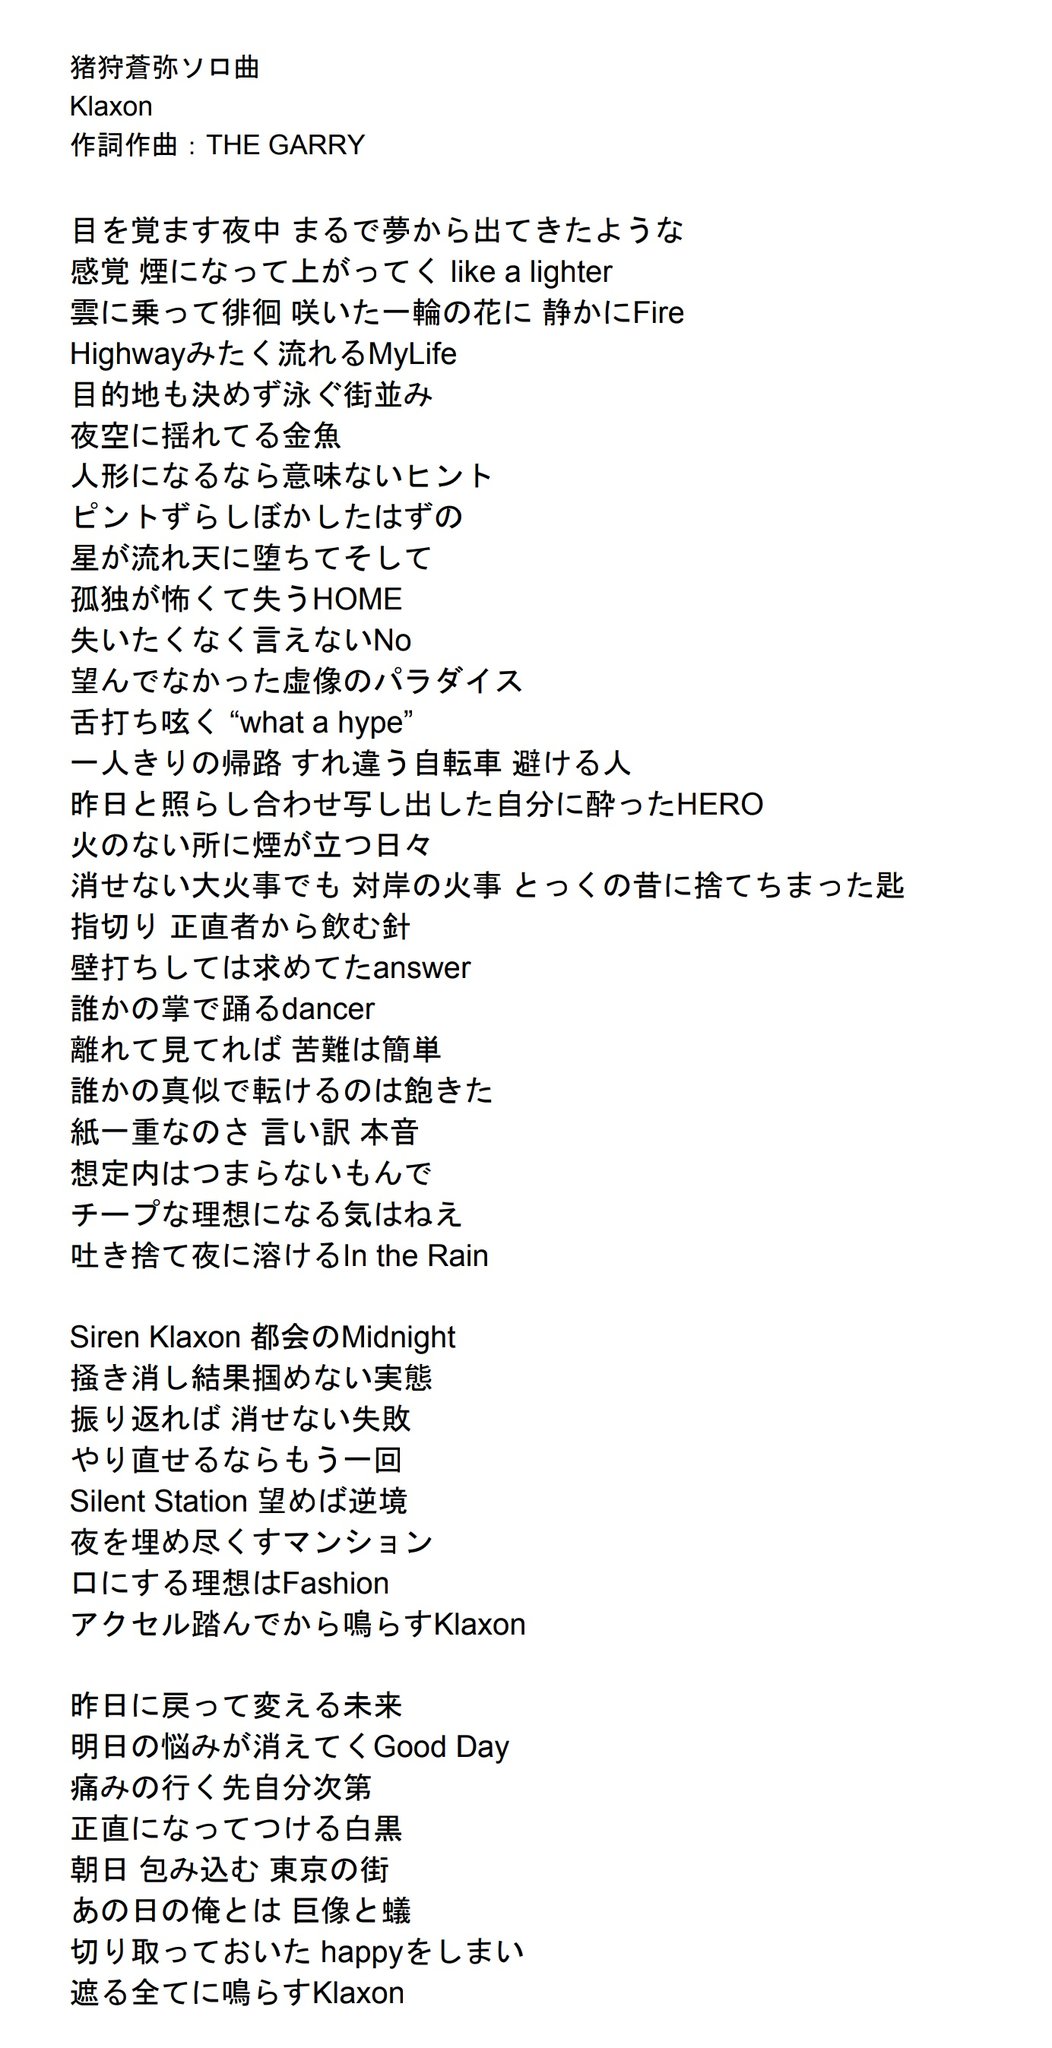 Desperado Lyrics - 羊毛とおはな - Only on JioSaavn